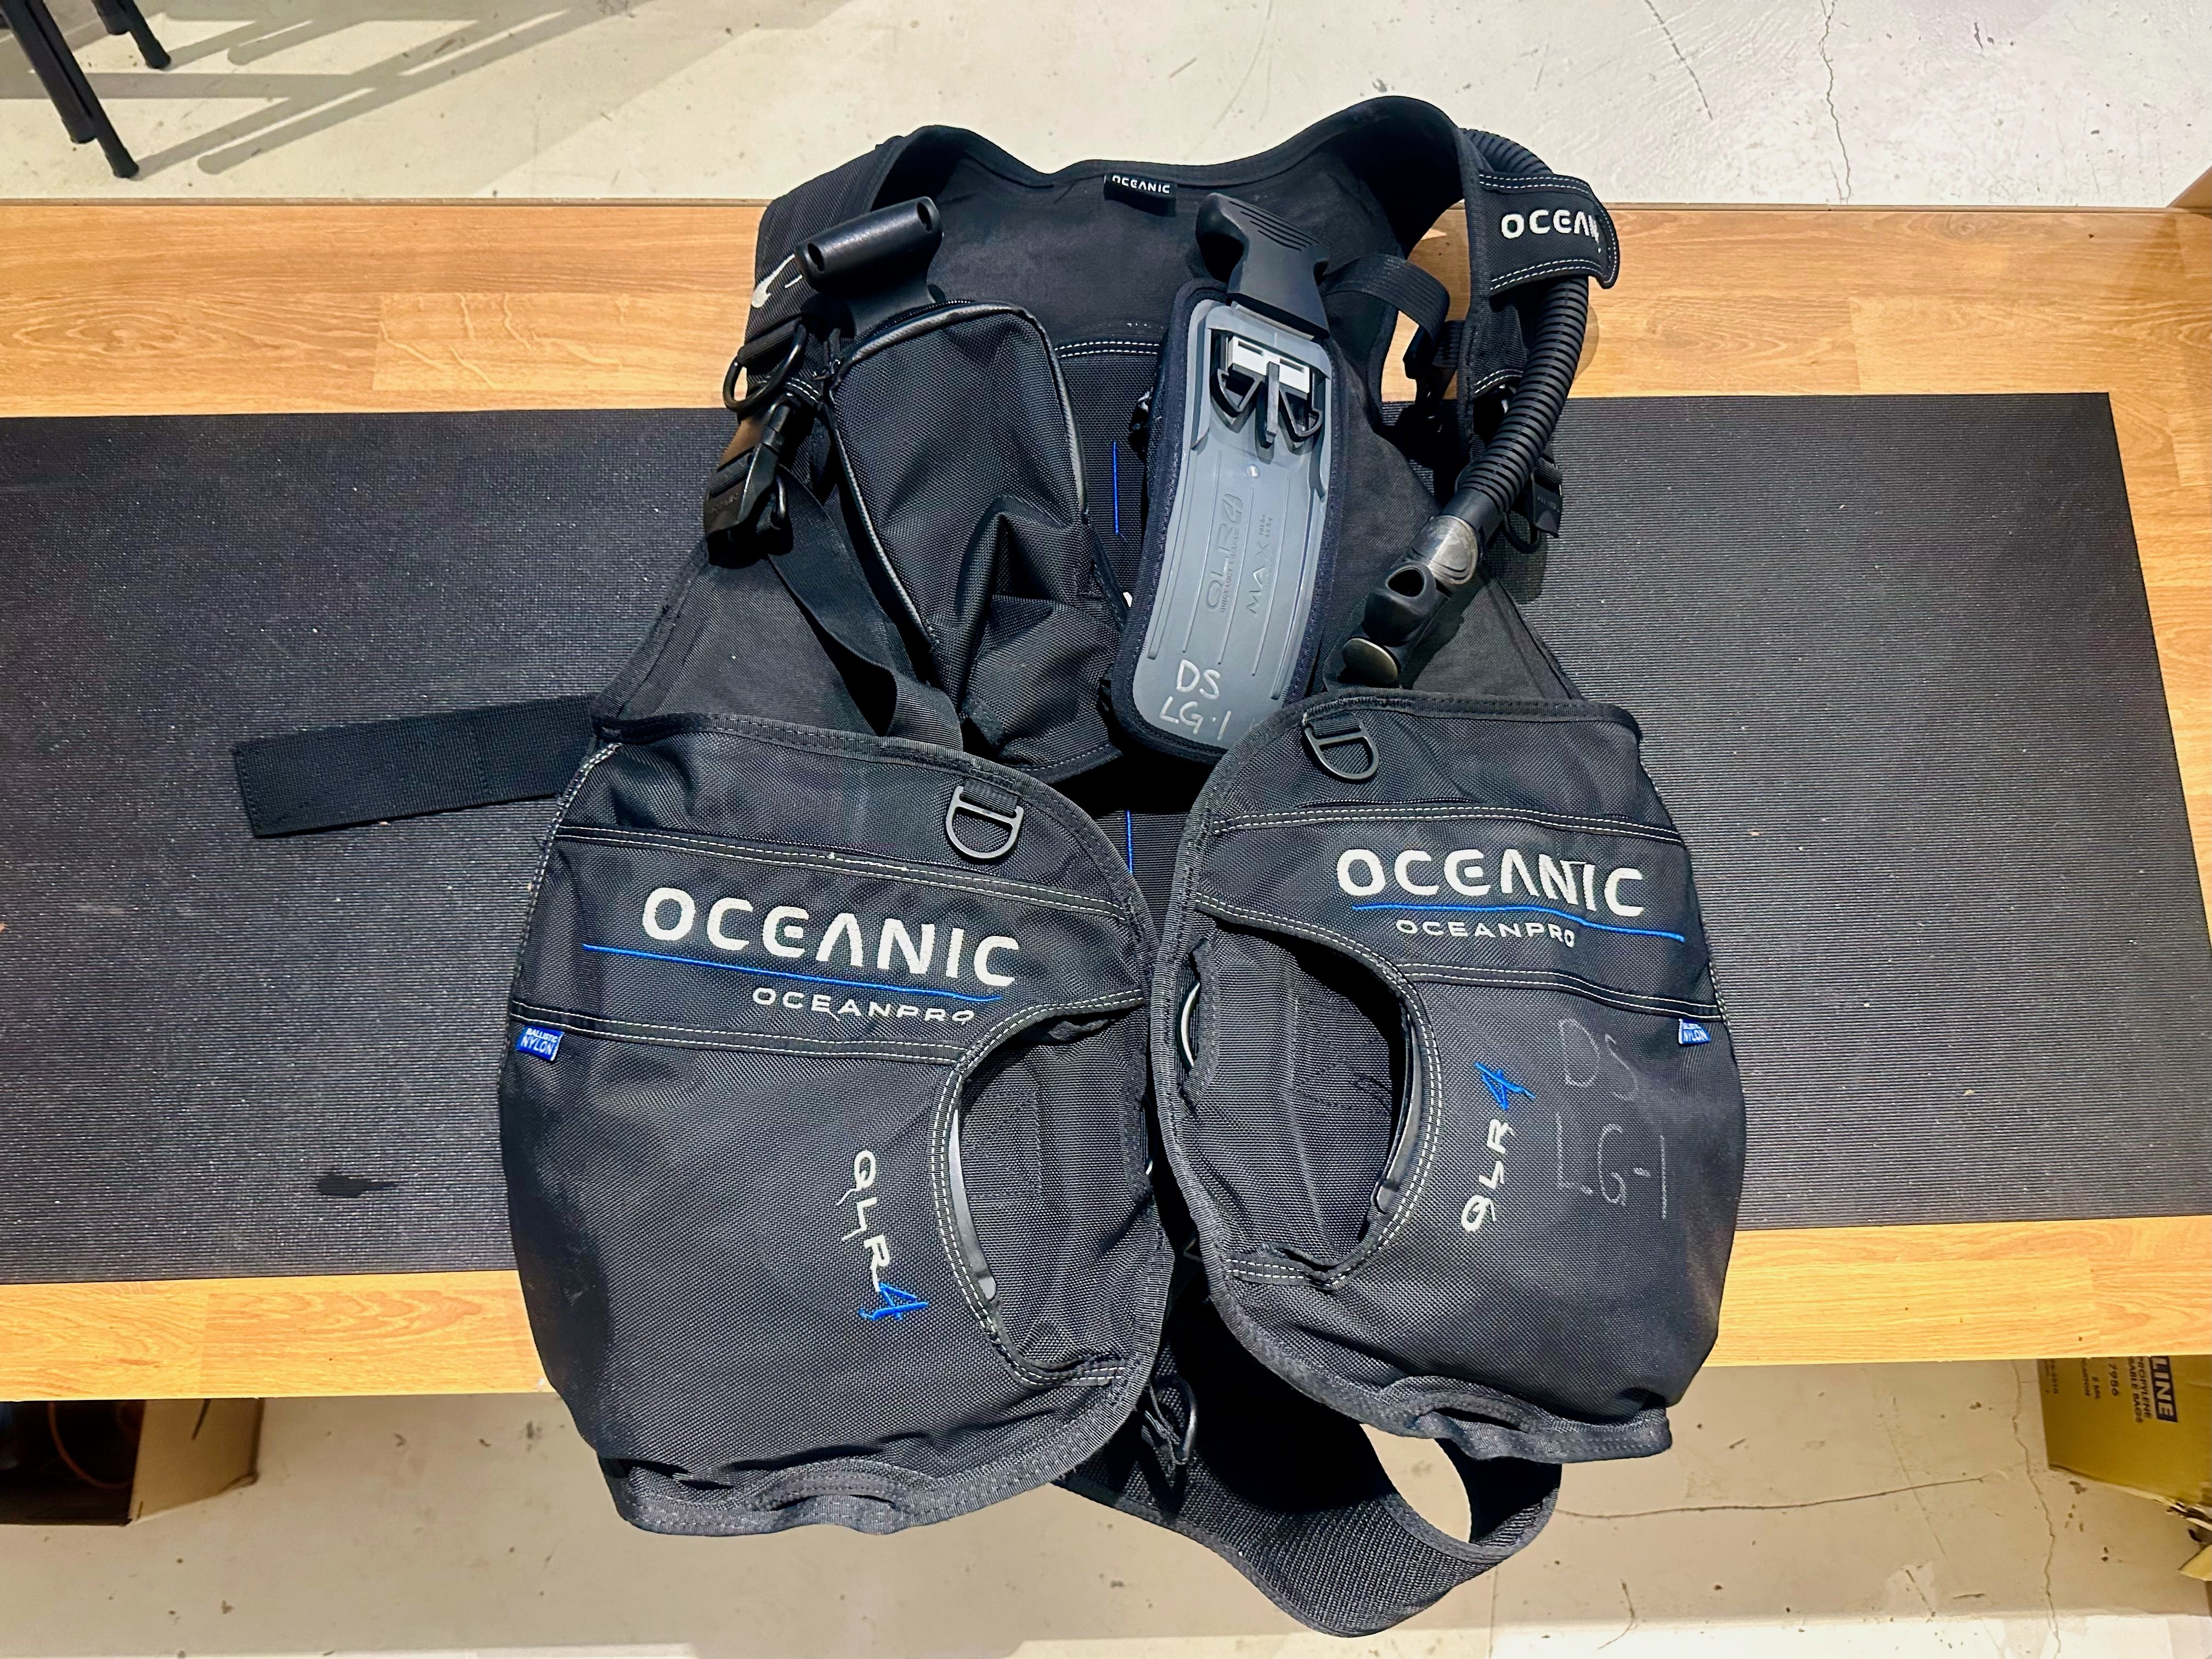 Oceanic OceanPro Used Size Large